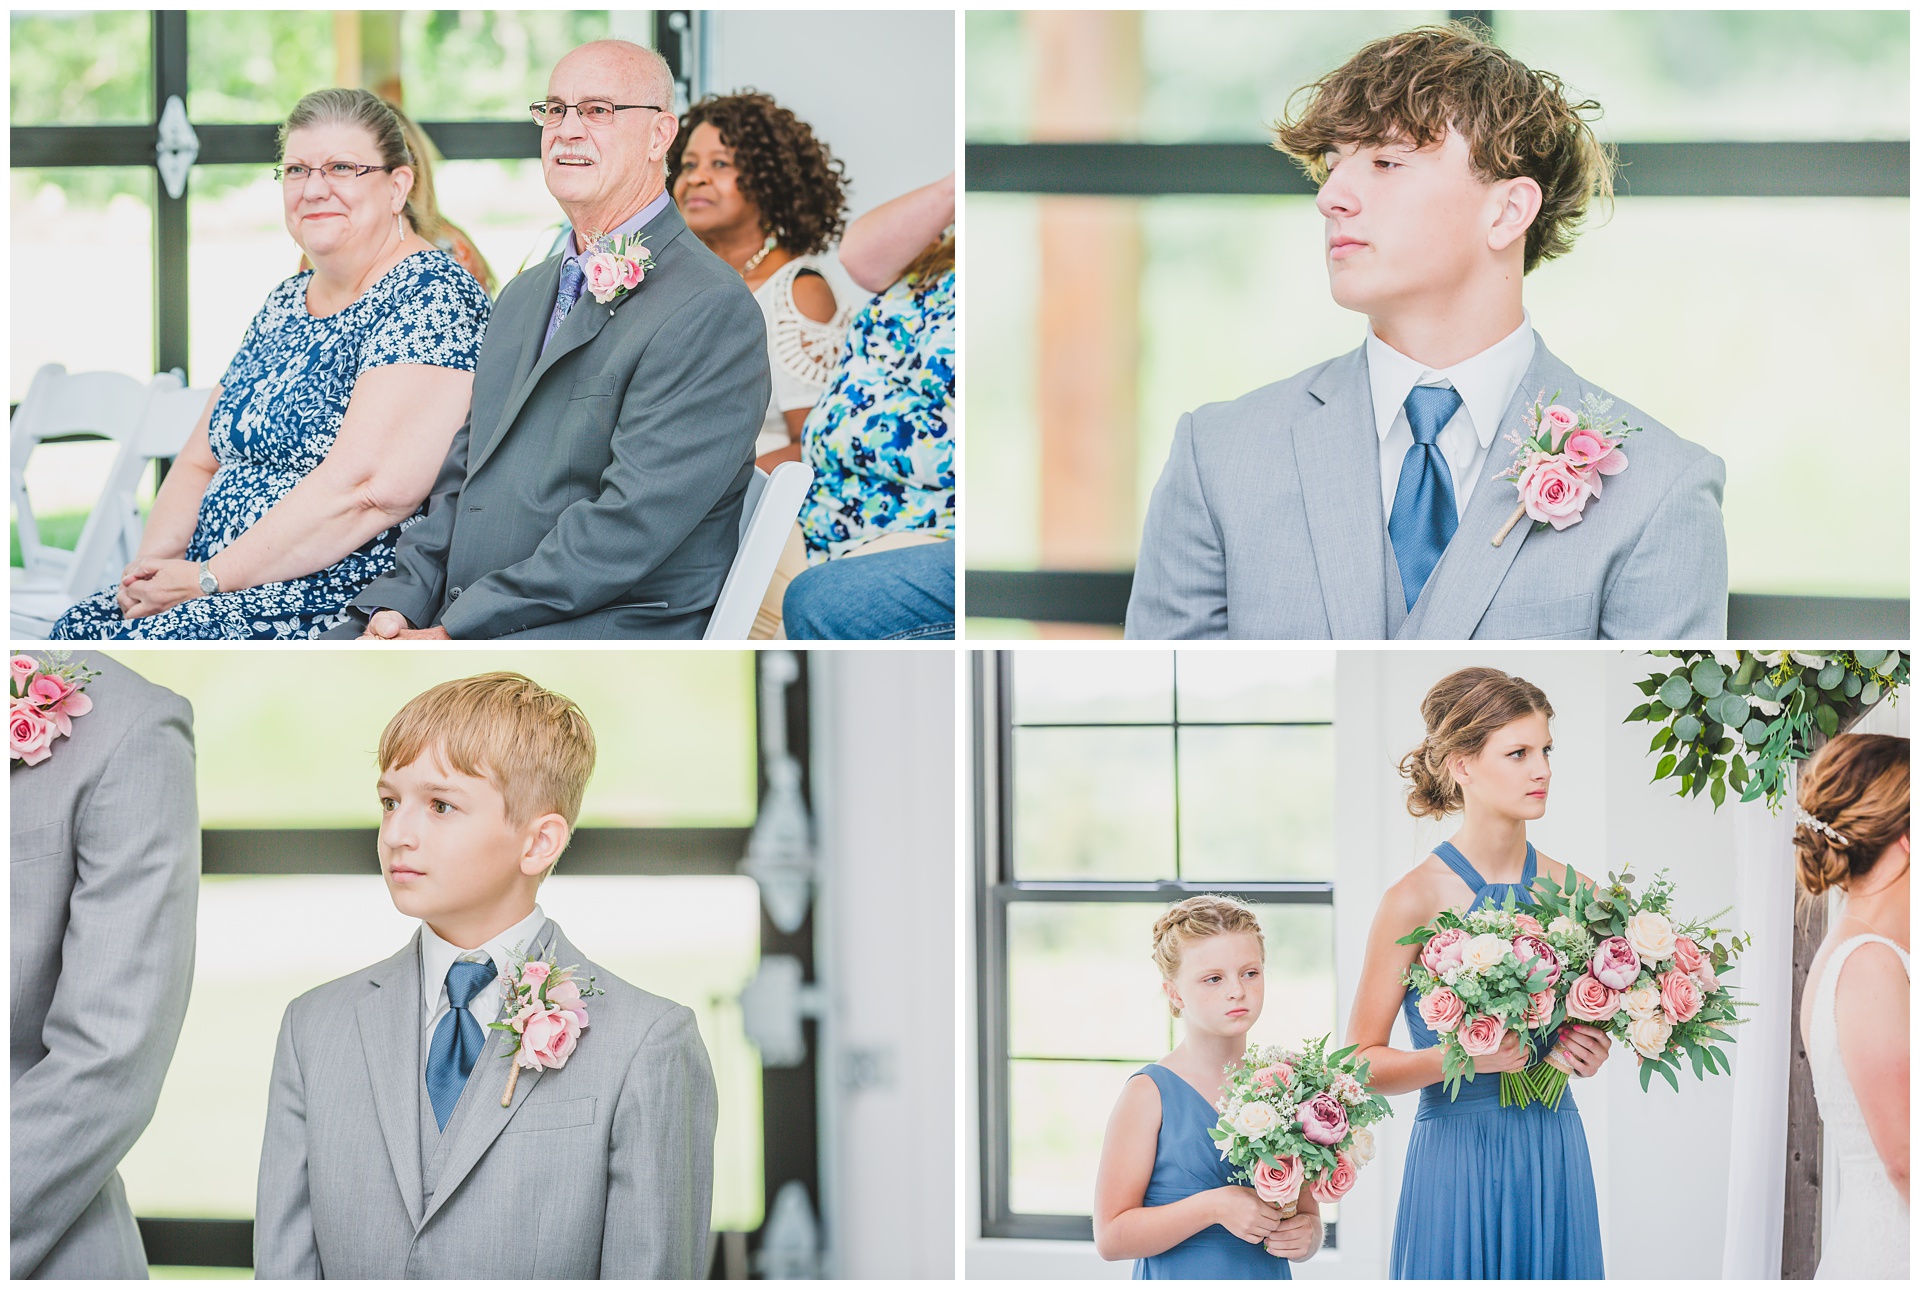 Wedding photography at The Brim by Kansas City wedding photographers Wisdom-Watson Weddings.